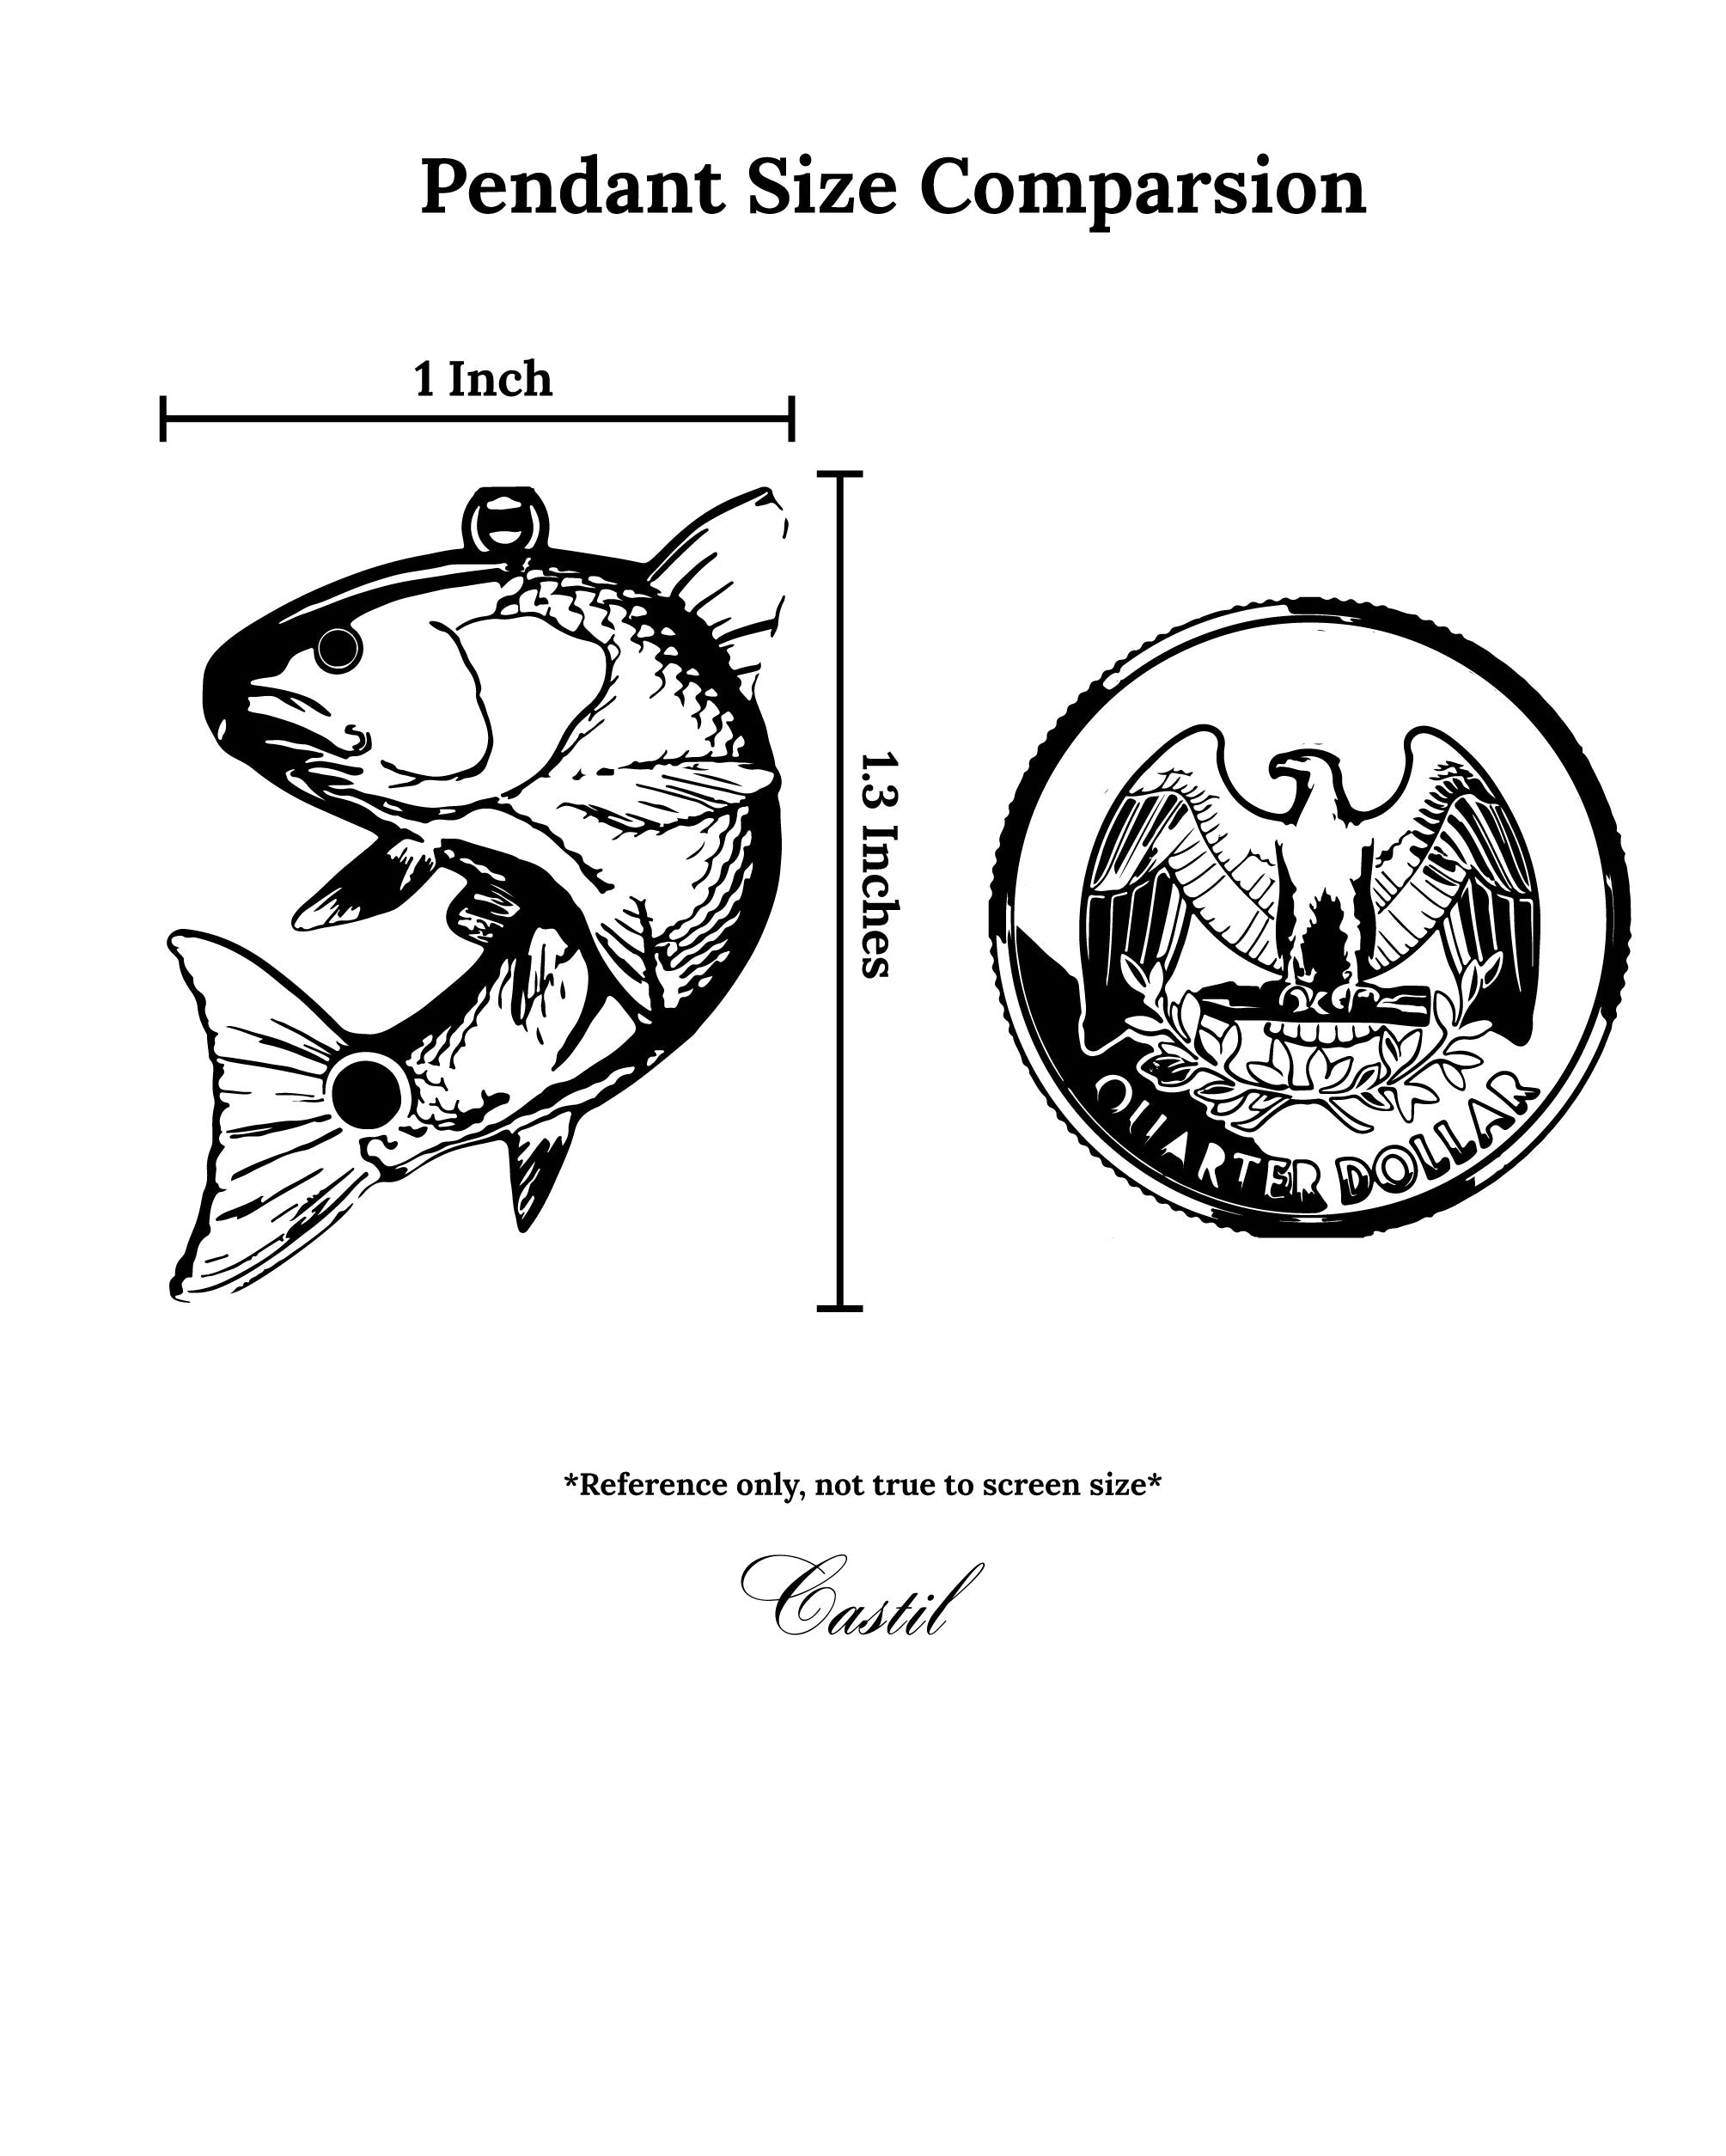 Redfish v2 Necklace